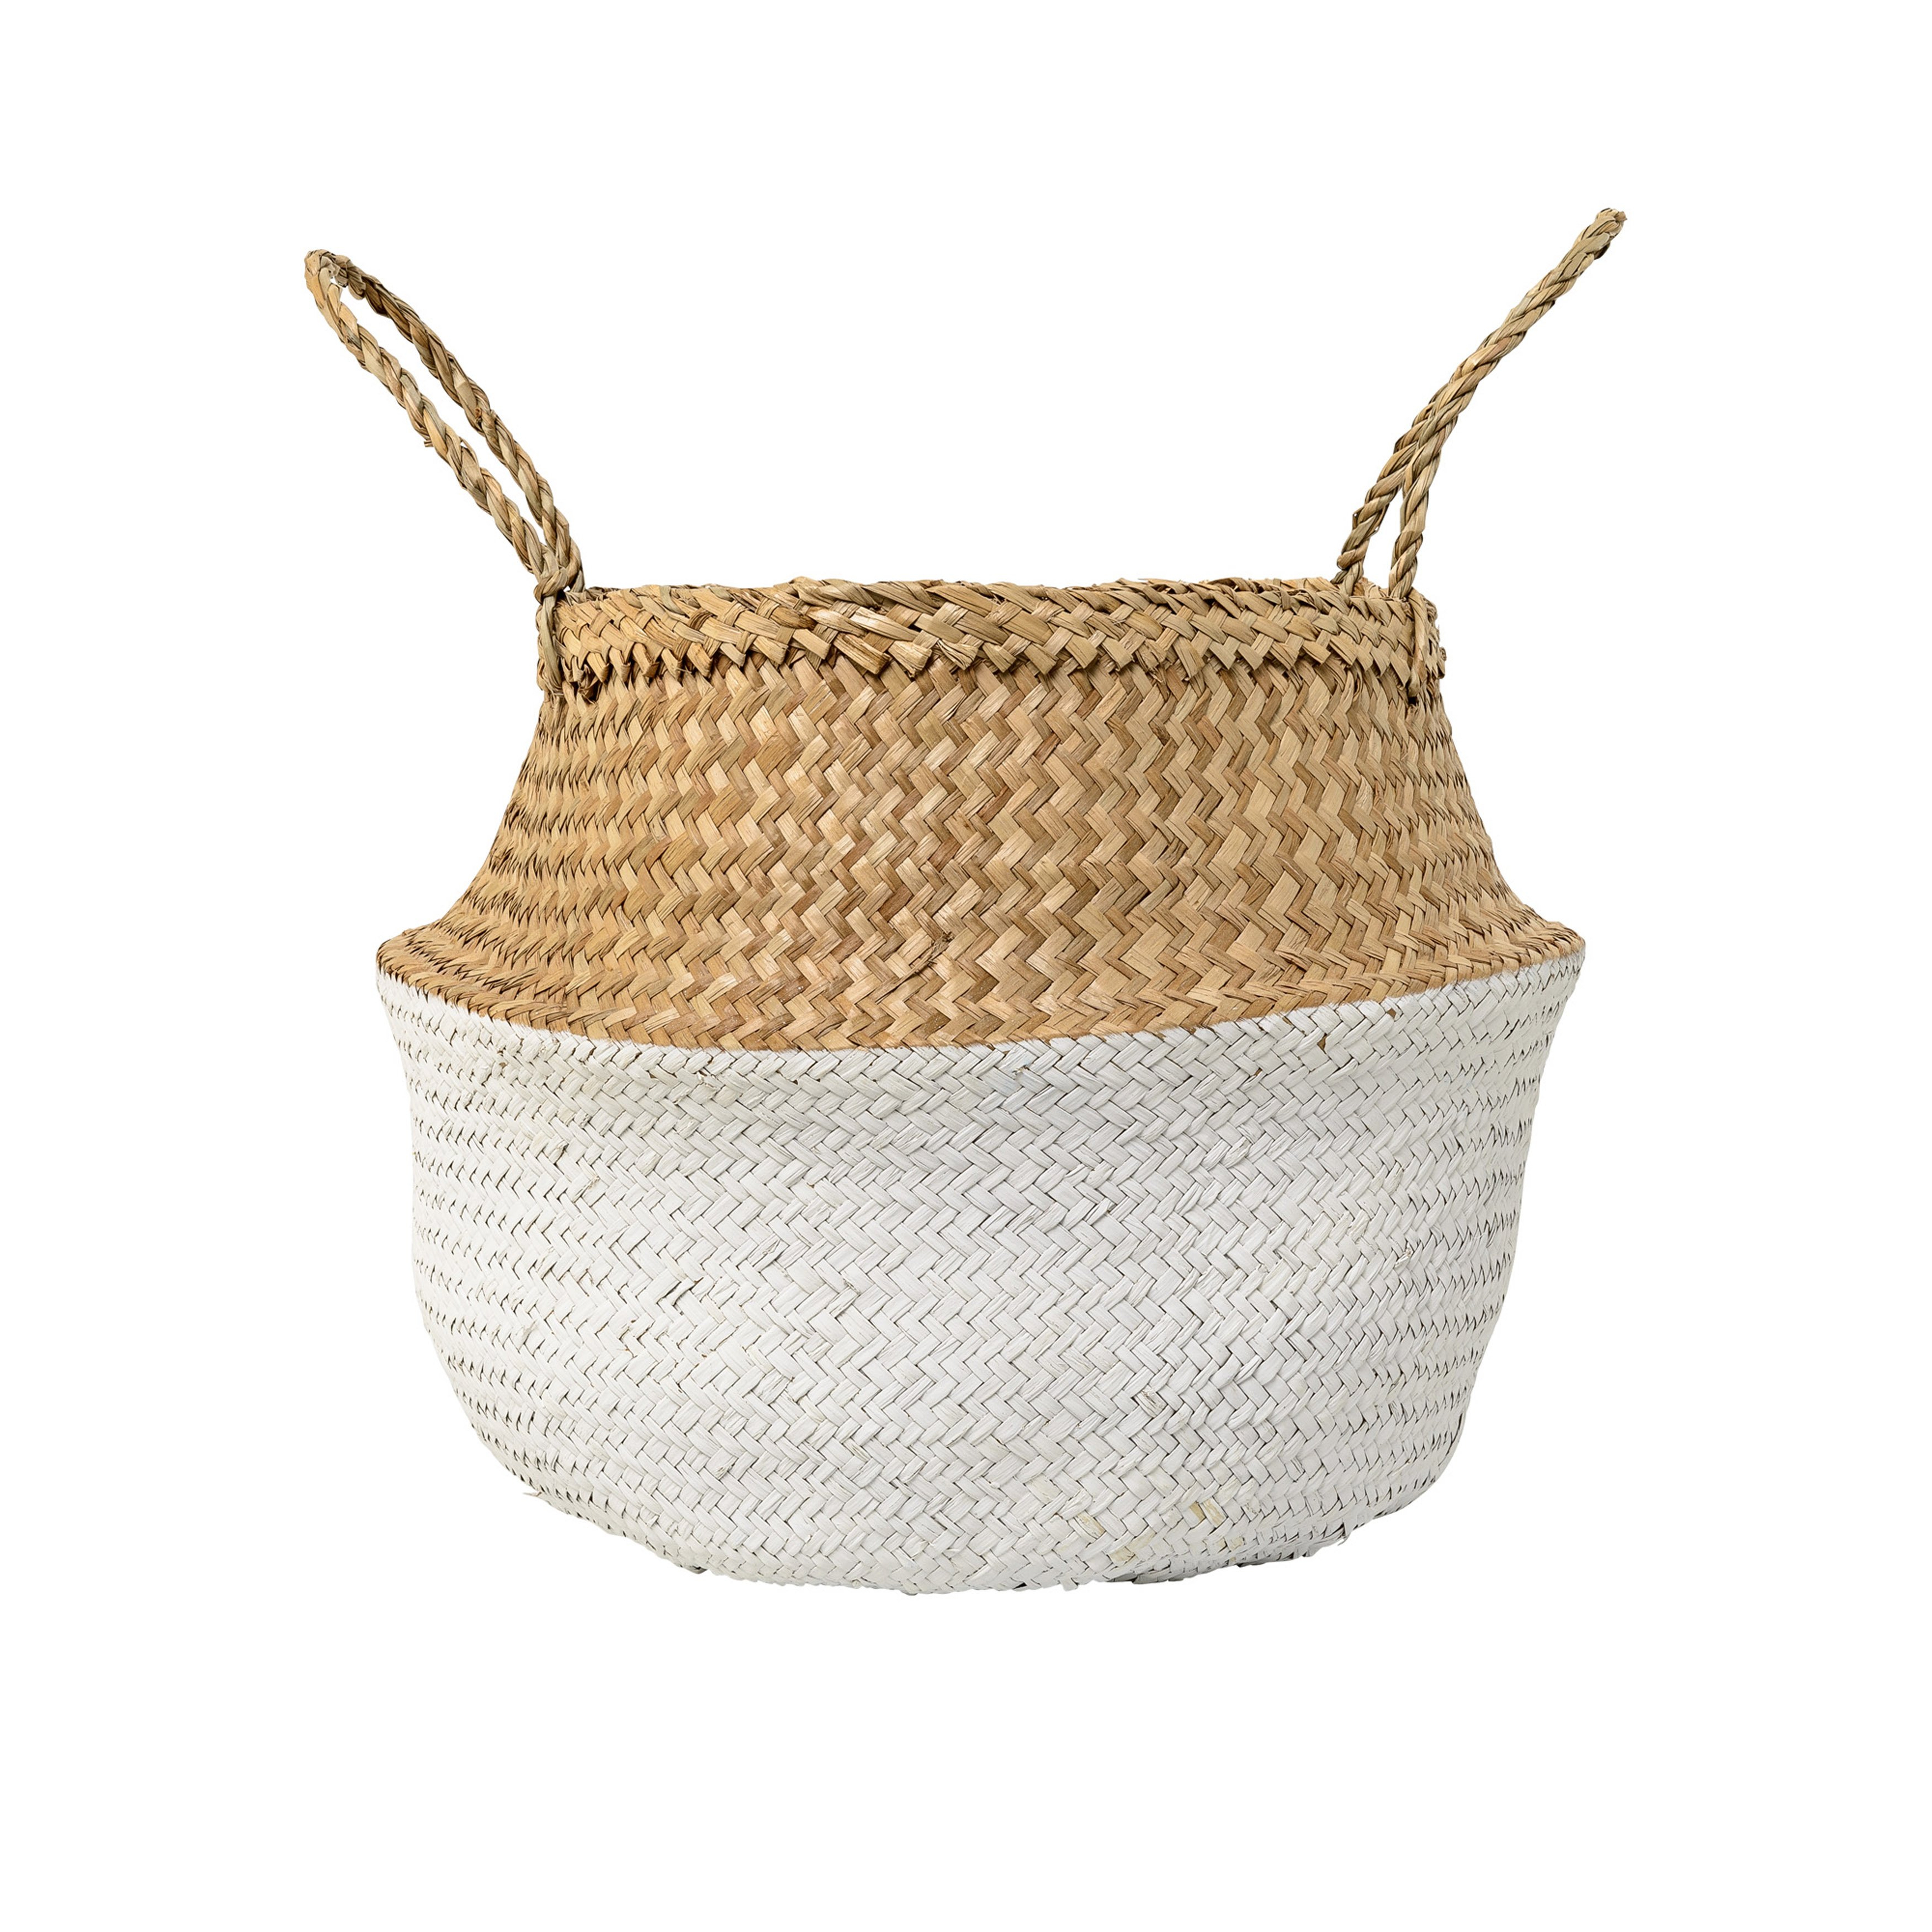 Talia Basket, Medium, White & Natural - Roam Common